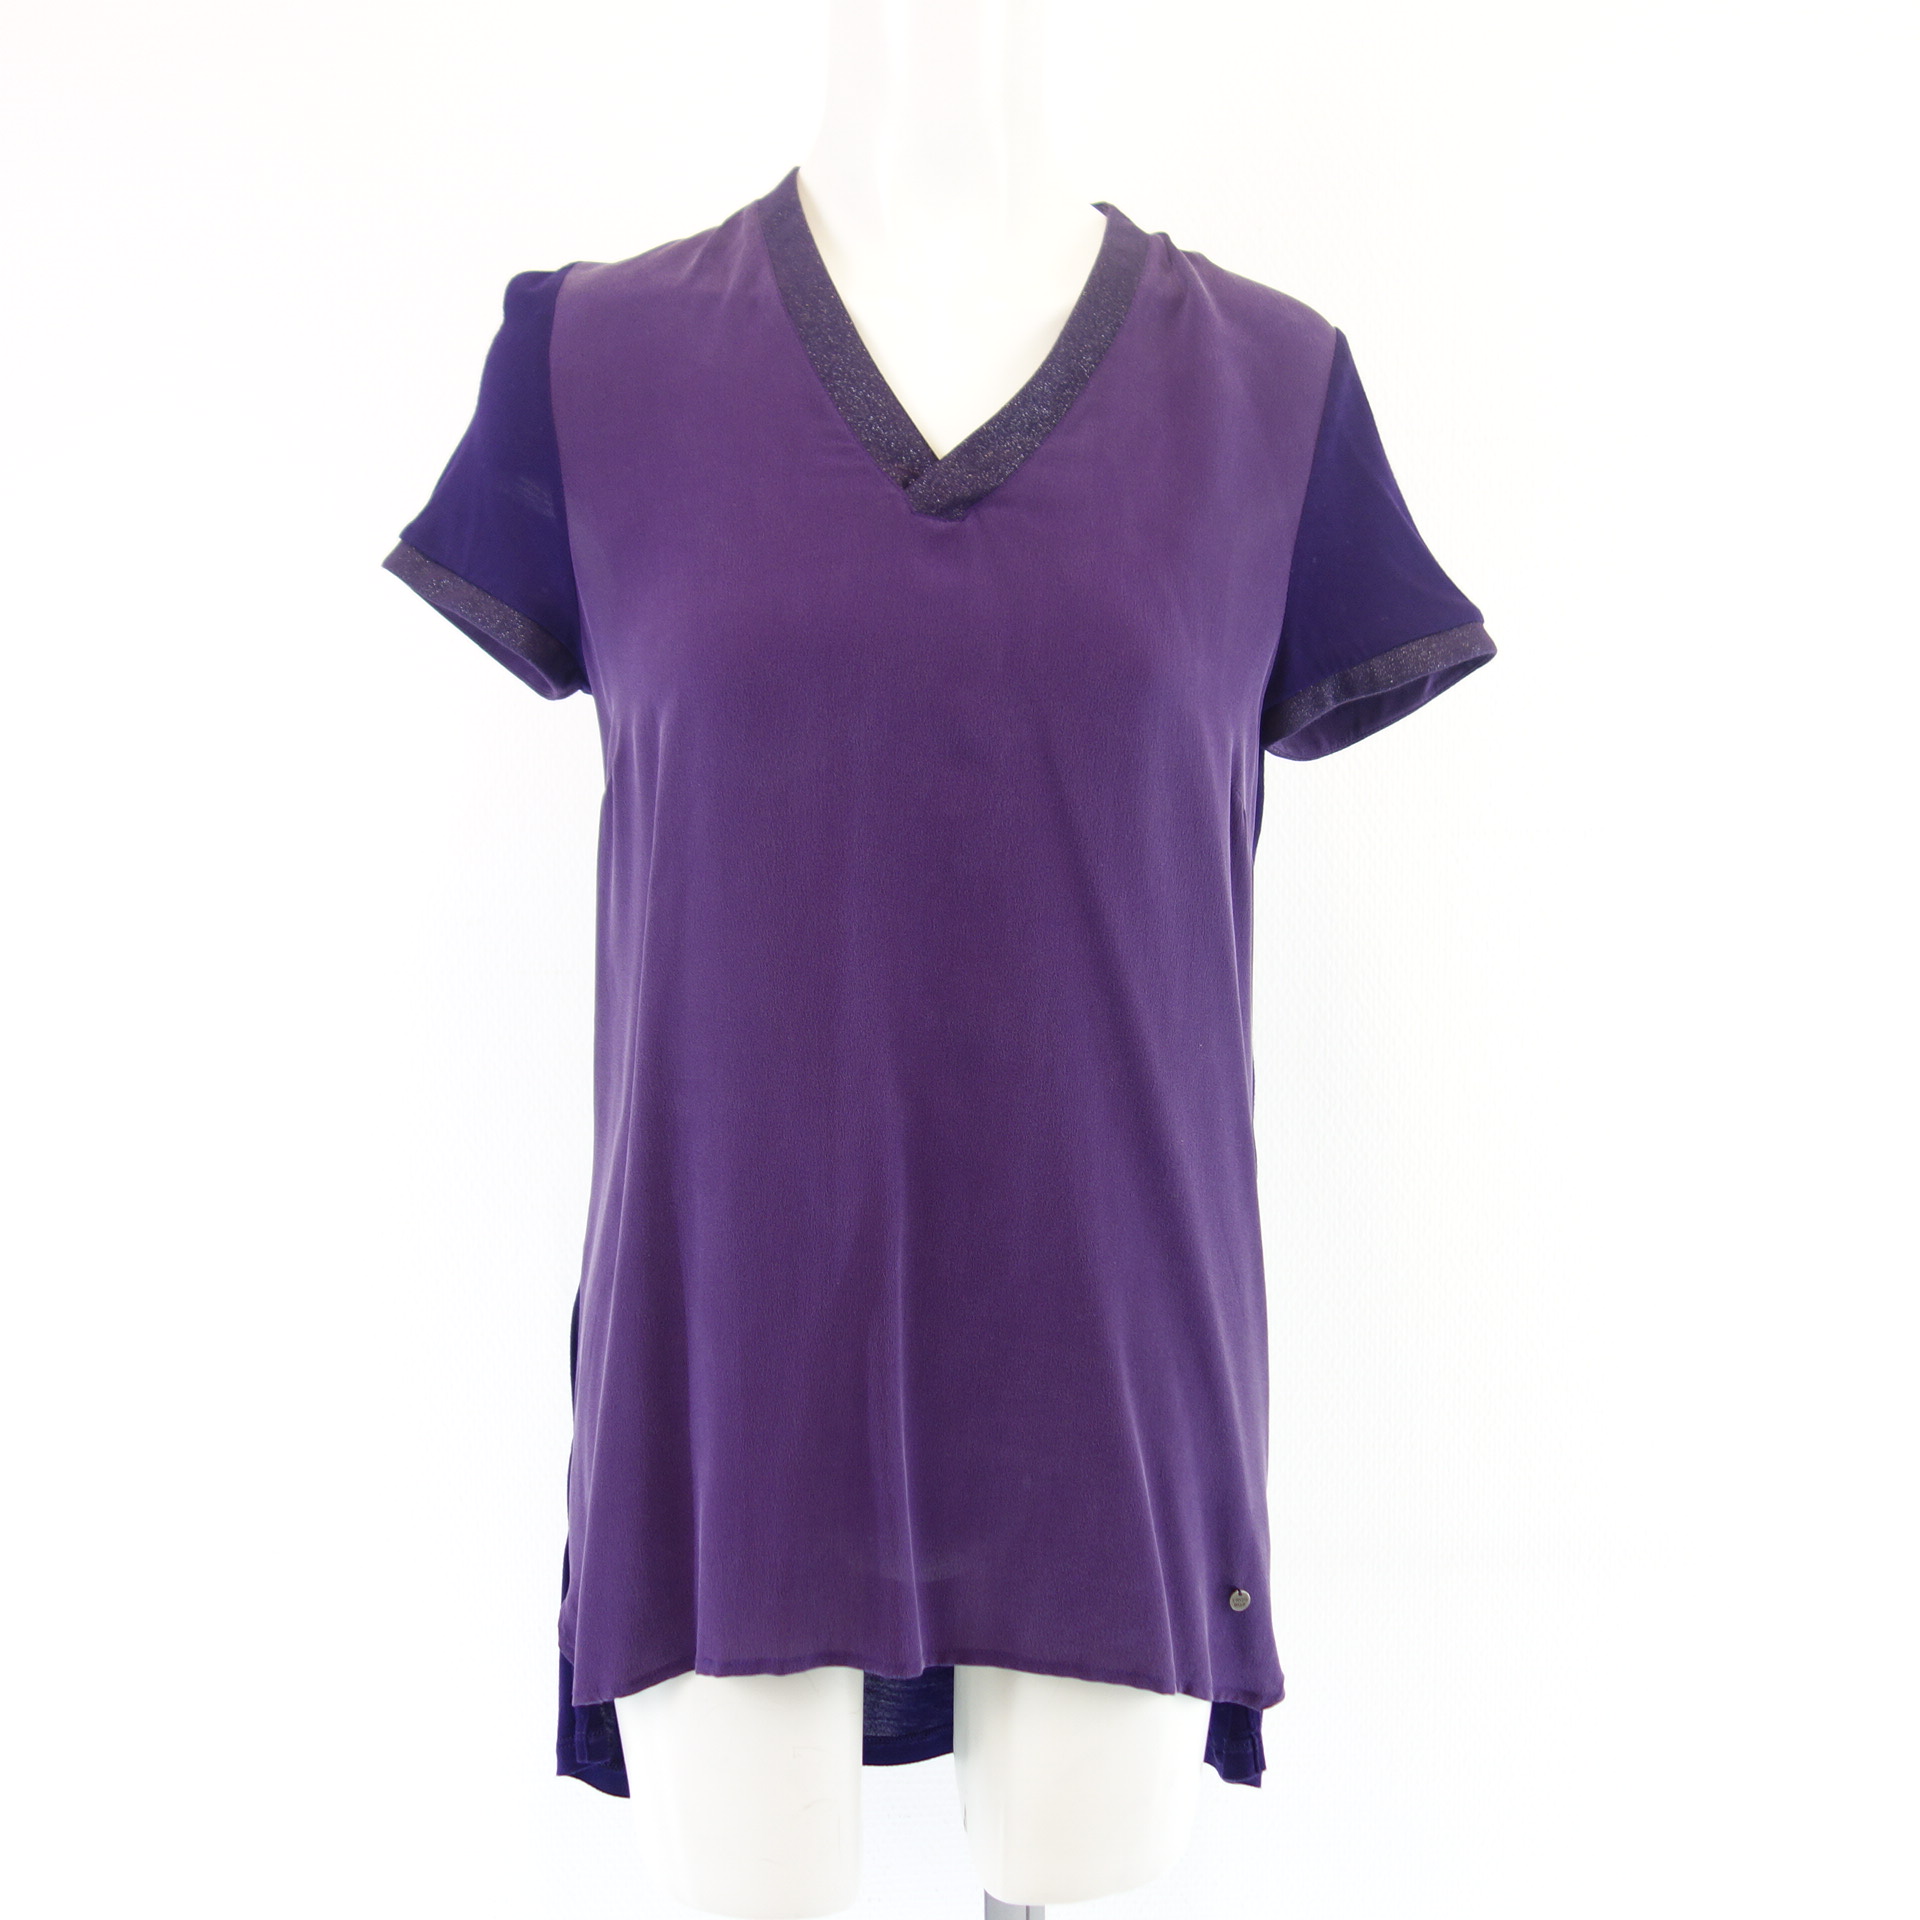 FROGBOX by Princess Langes Damen Shirt T-Shirt Tunika Seide Viskose Lila Violett Größe 36